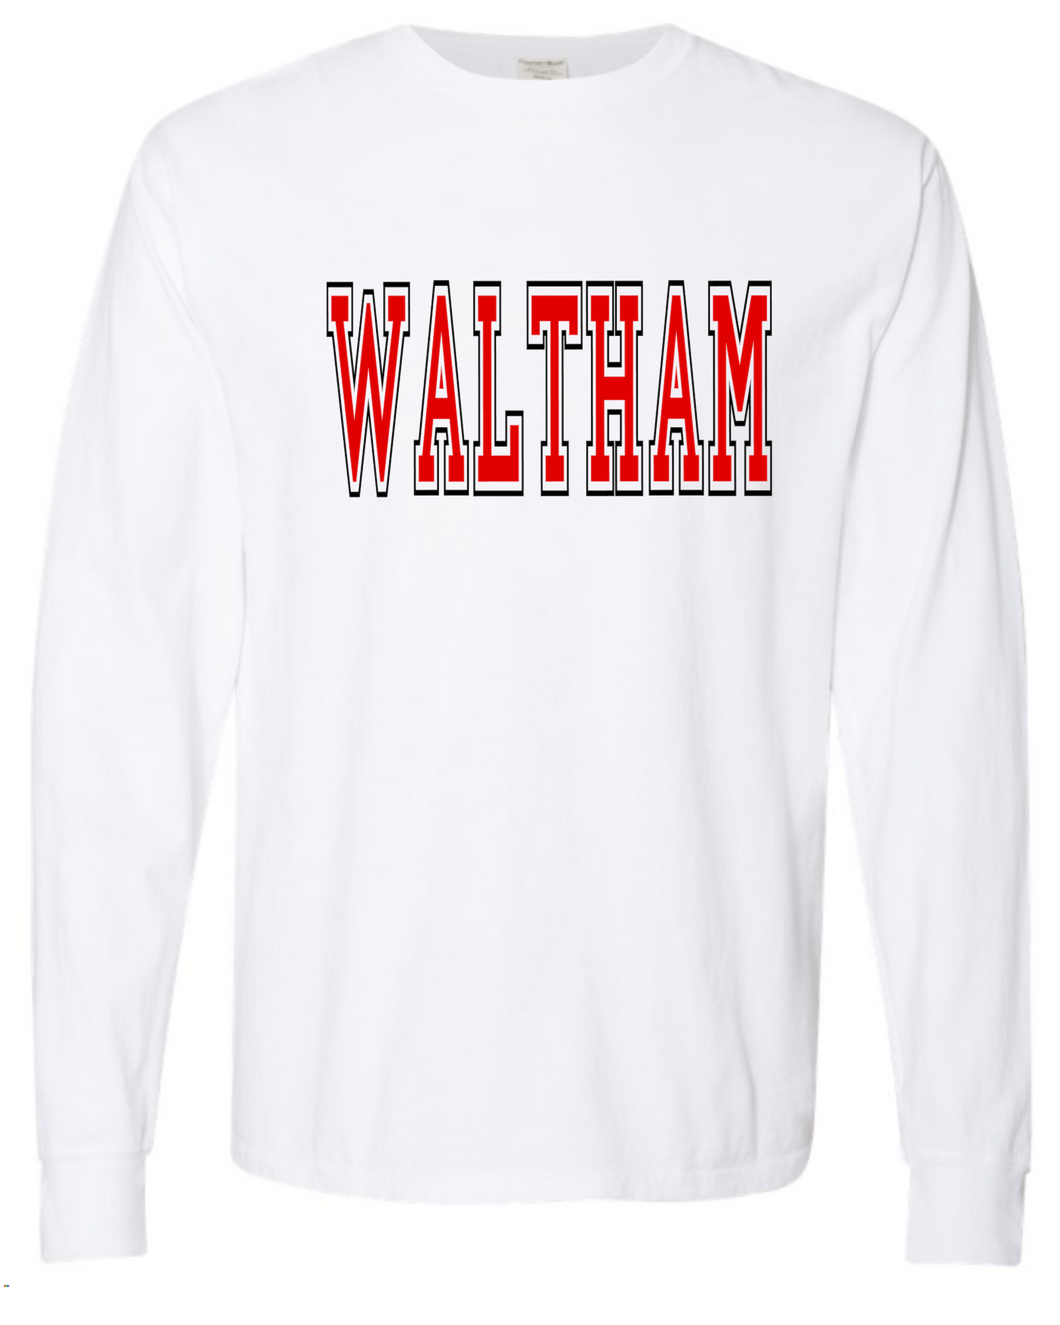 Waltham Varsity long sleeve tee